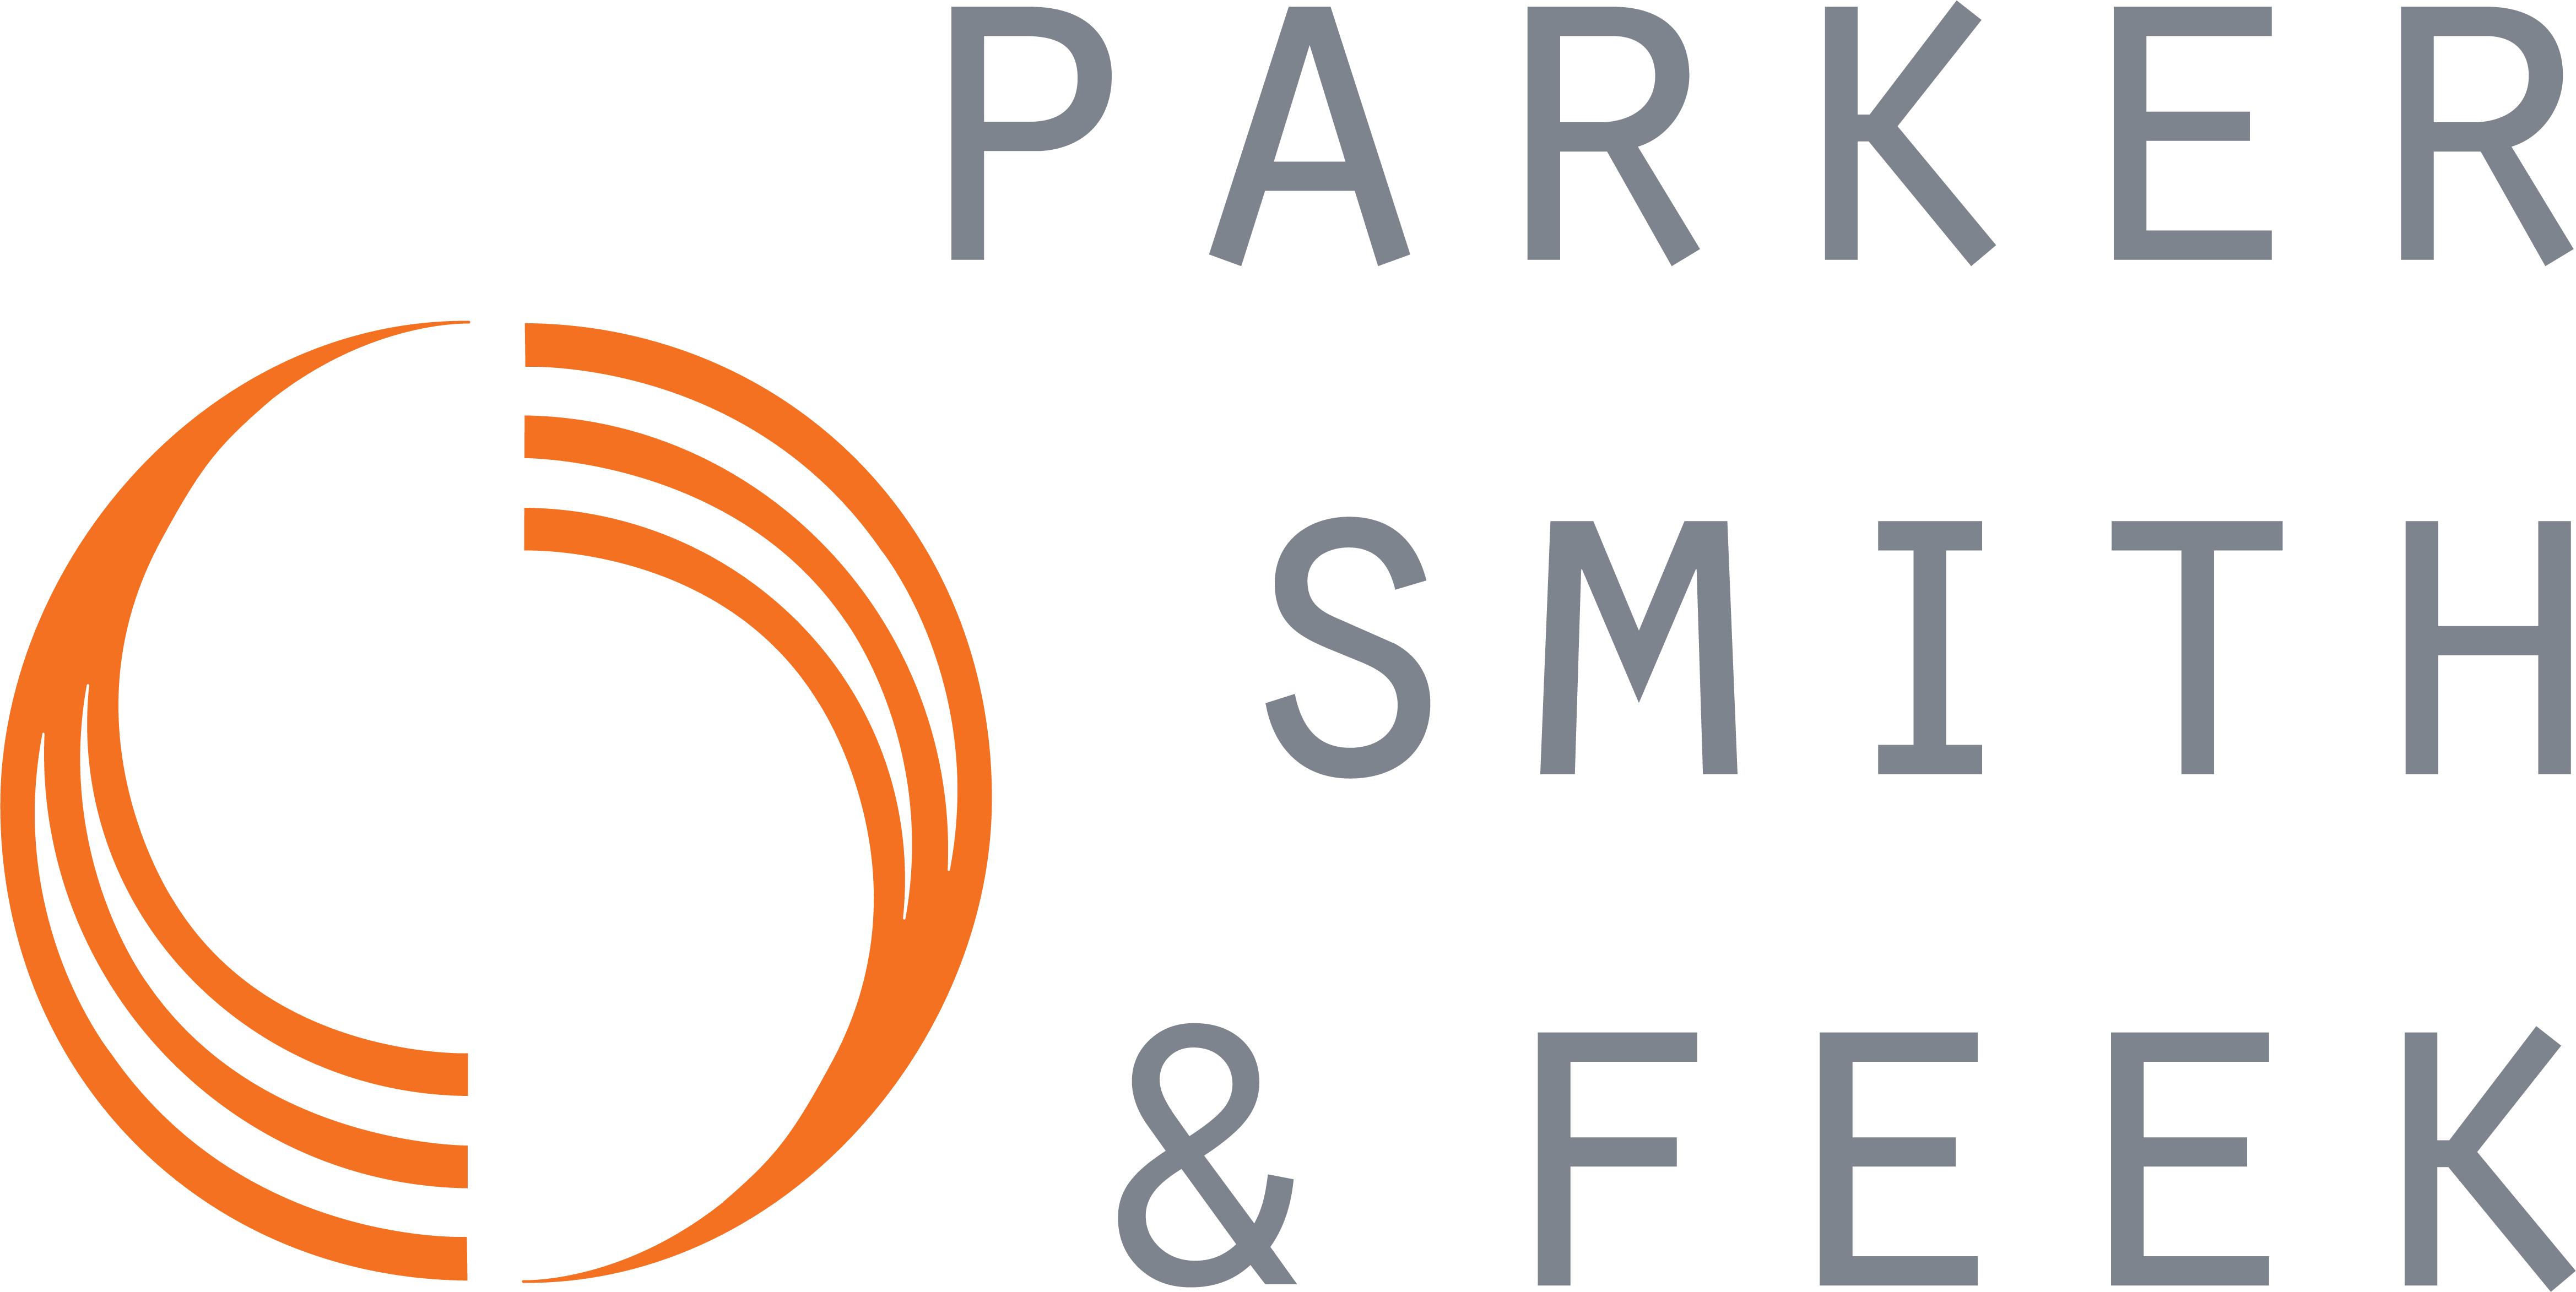 Parker Smith Feek logo